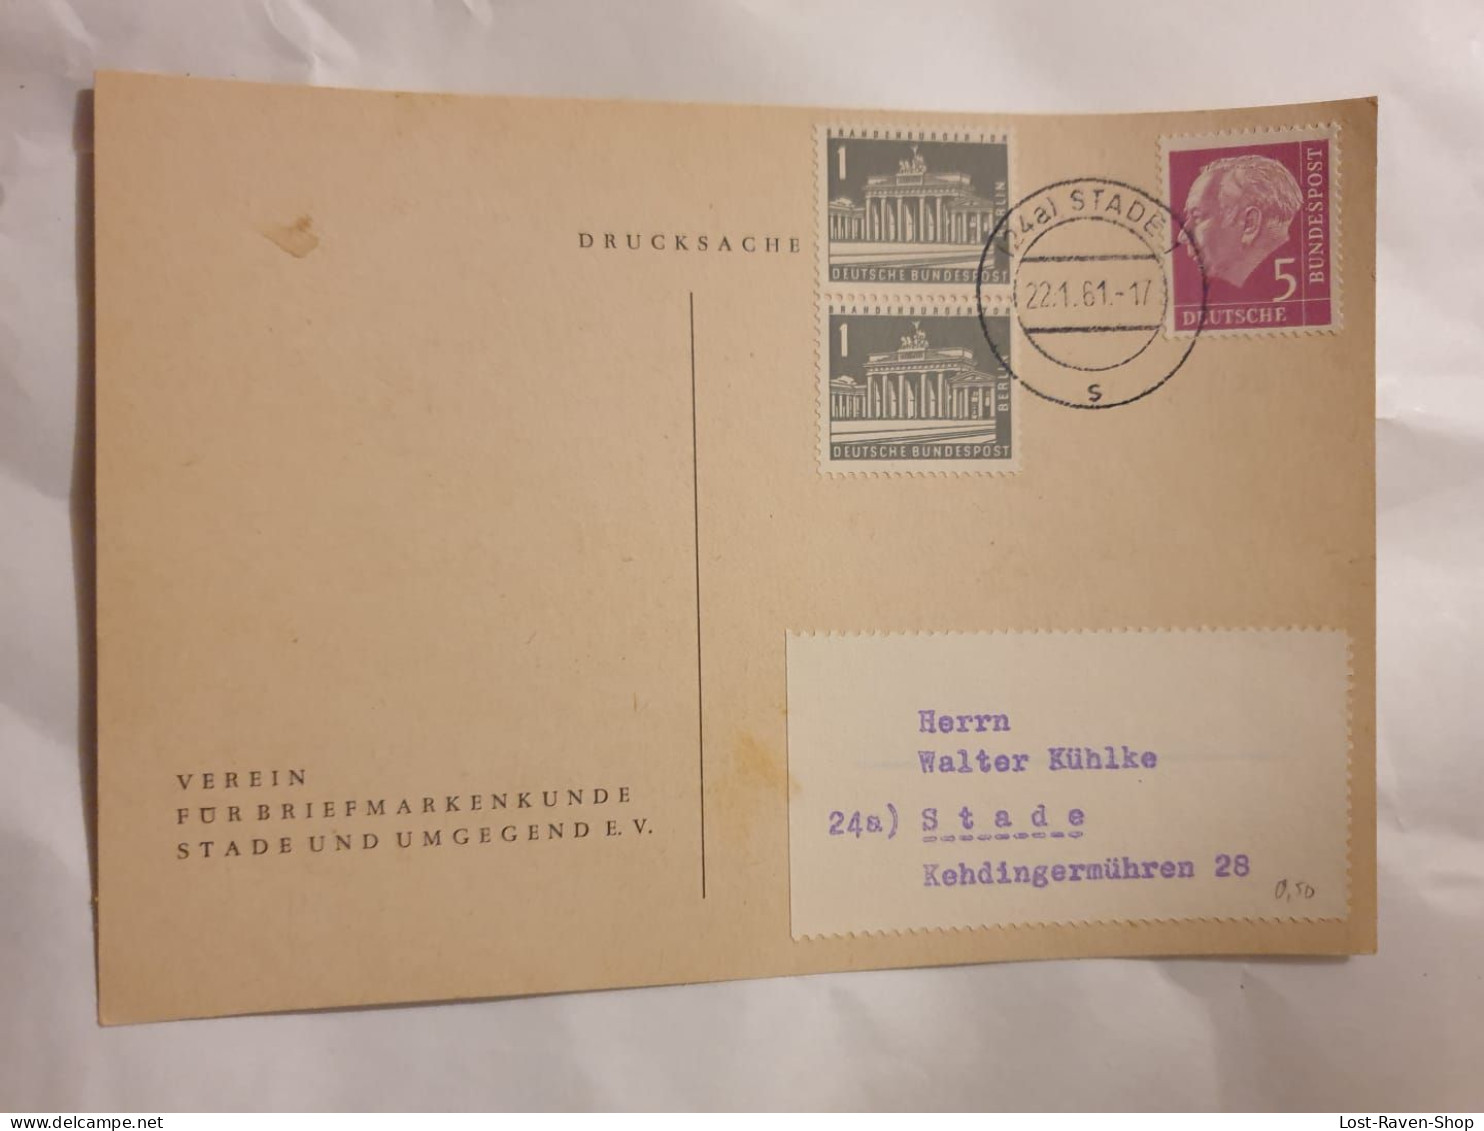 Stempel - Stade 22.1.1961 - Postcards - Used